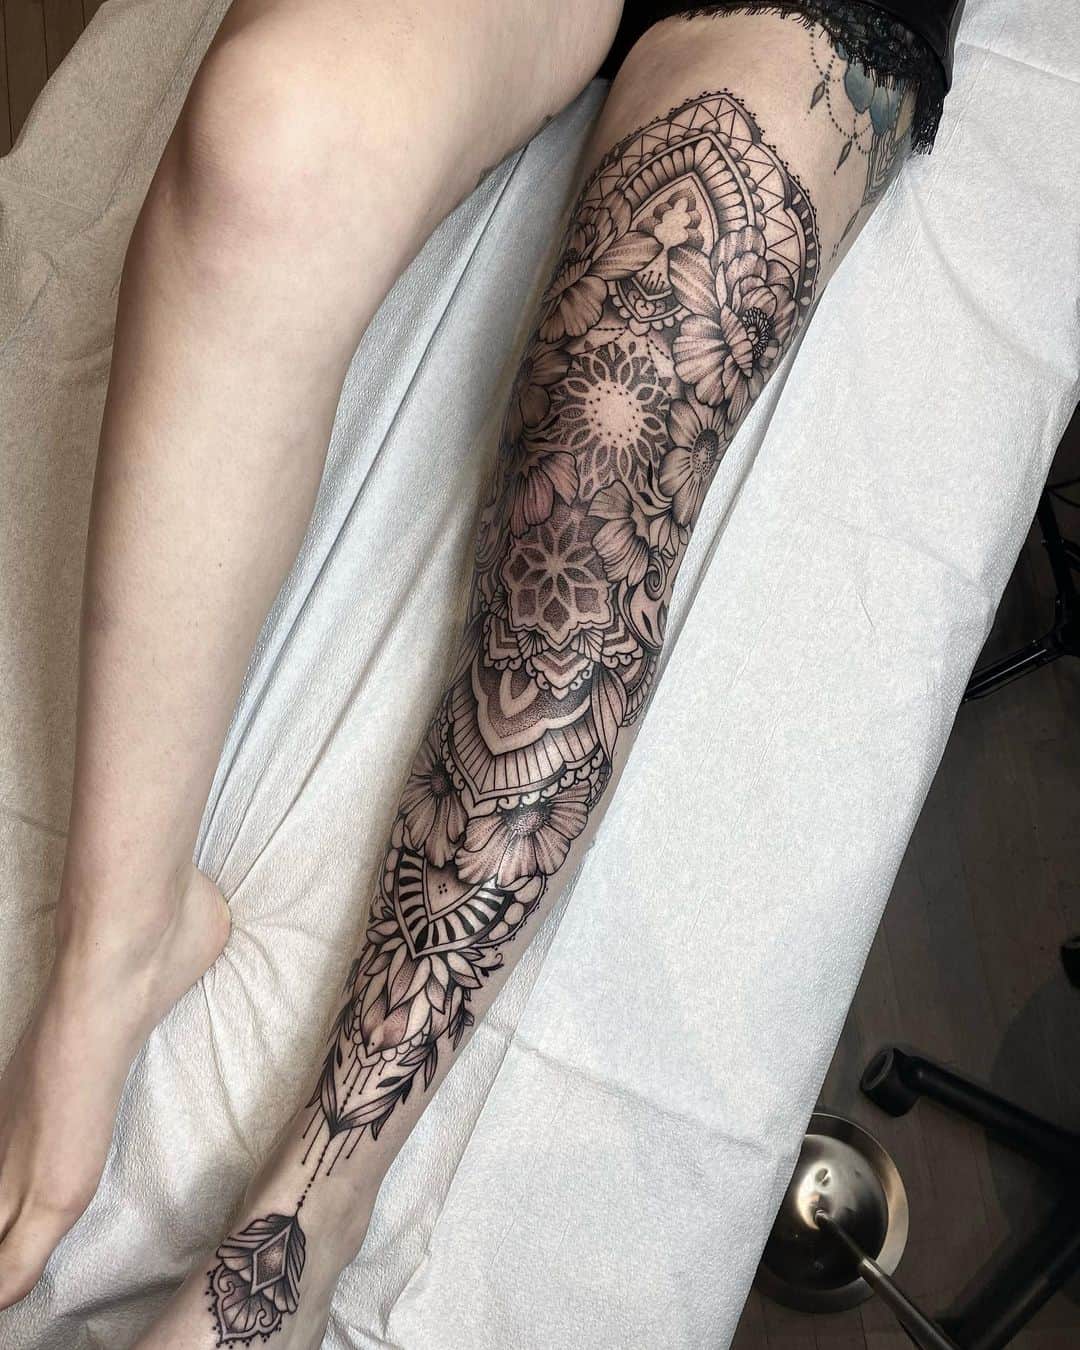 Amazing flower tattoo on thigh by marine ishigo